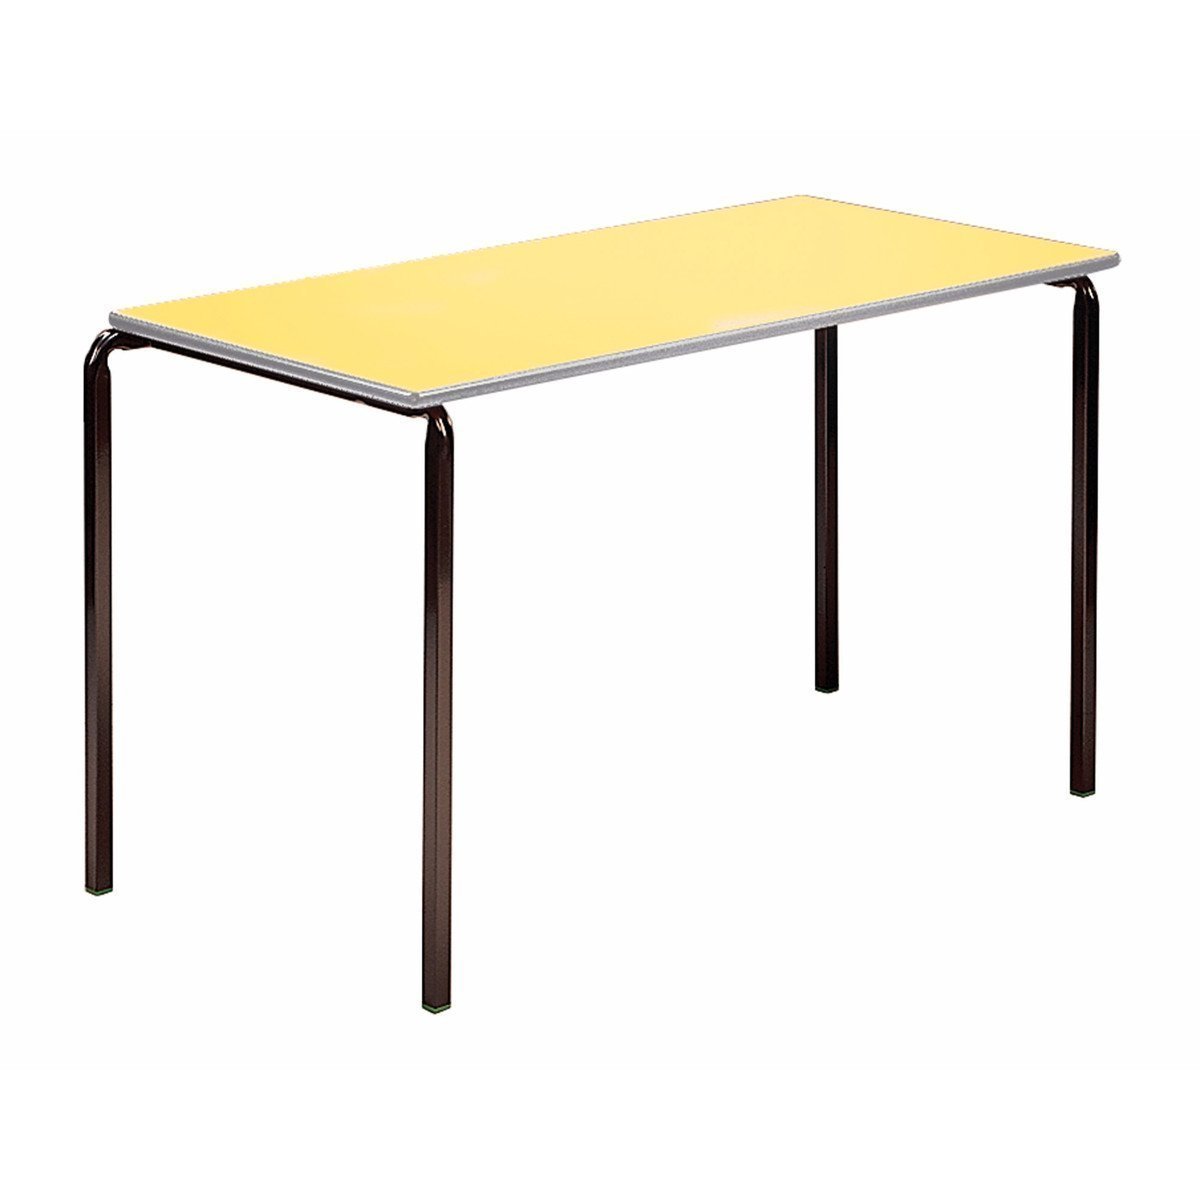 classroom tables 1100 x 550 mm / MDF Rectangular Crushbent Frame Classroom Tables 1100 x 550 mm / MDF